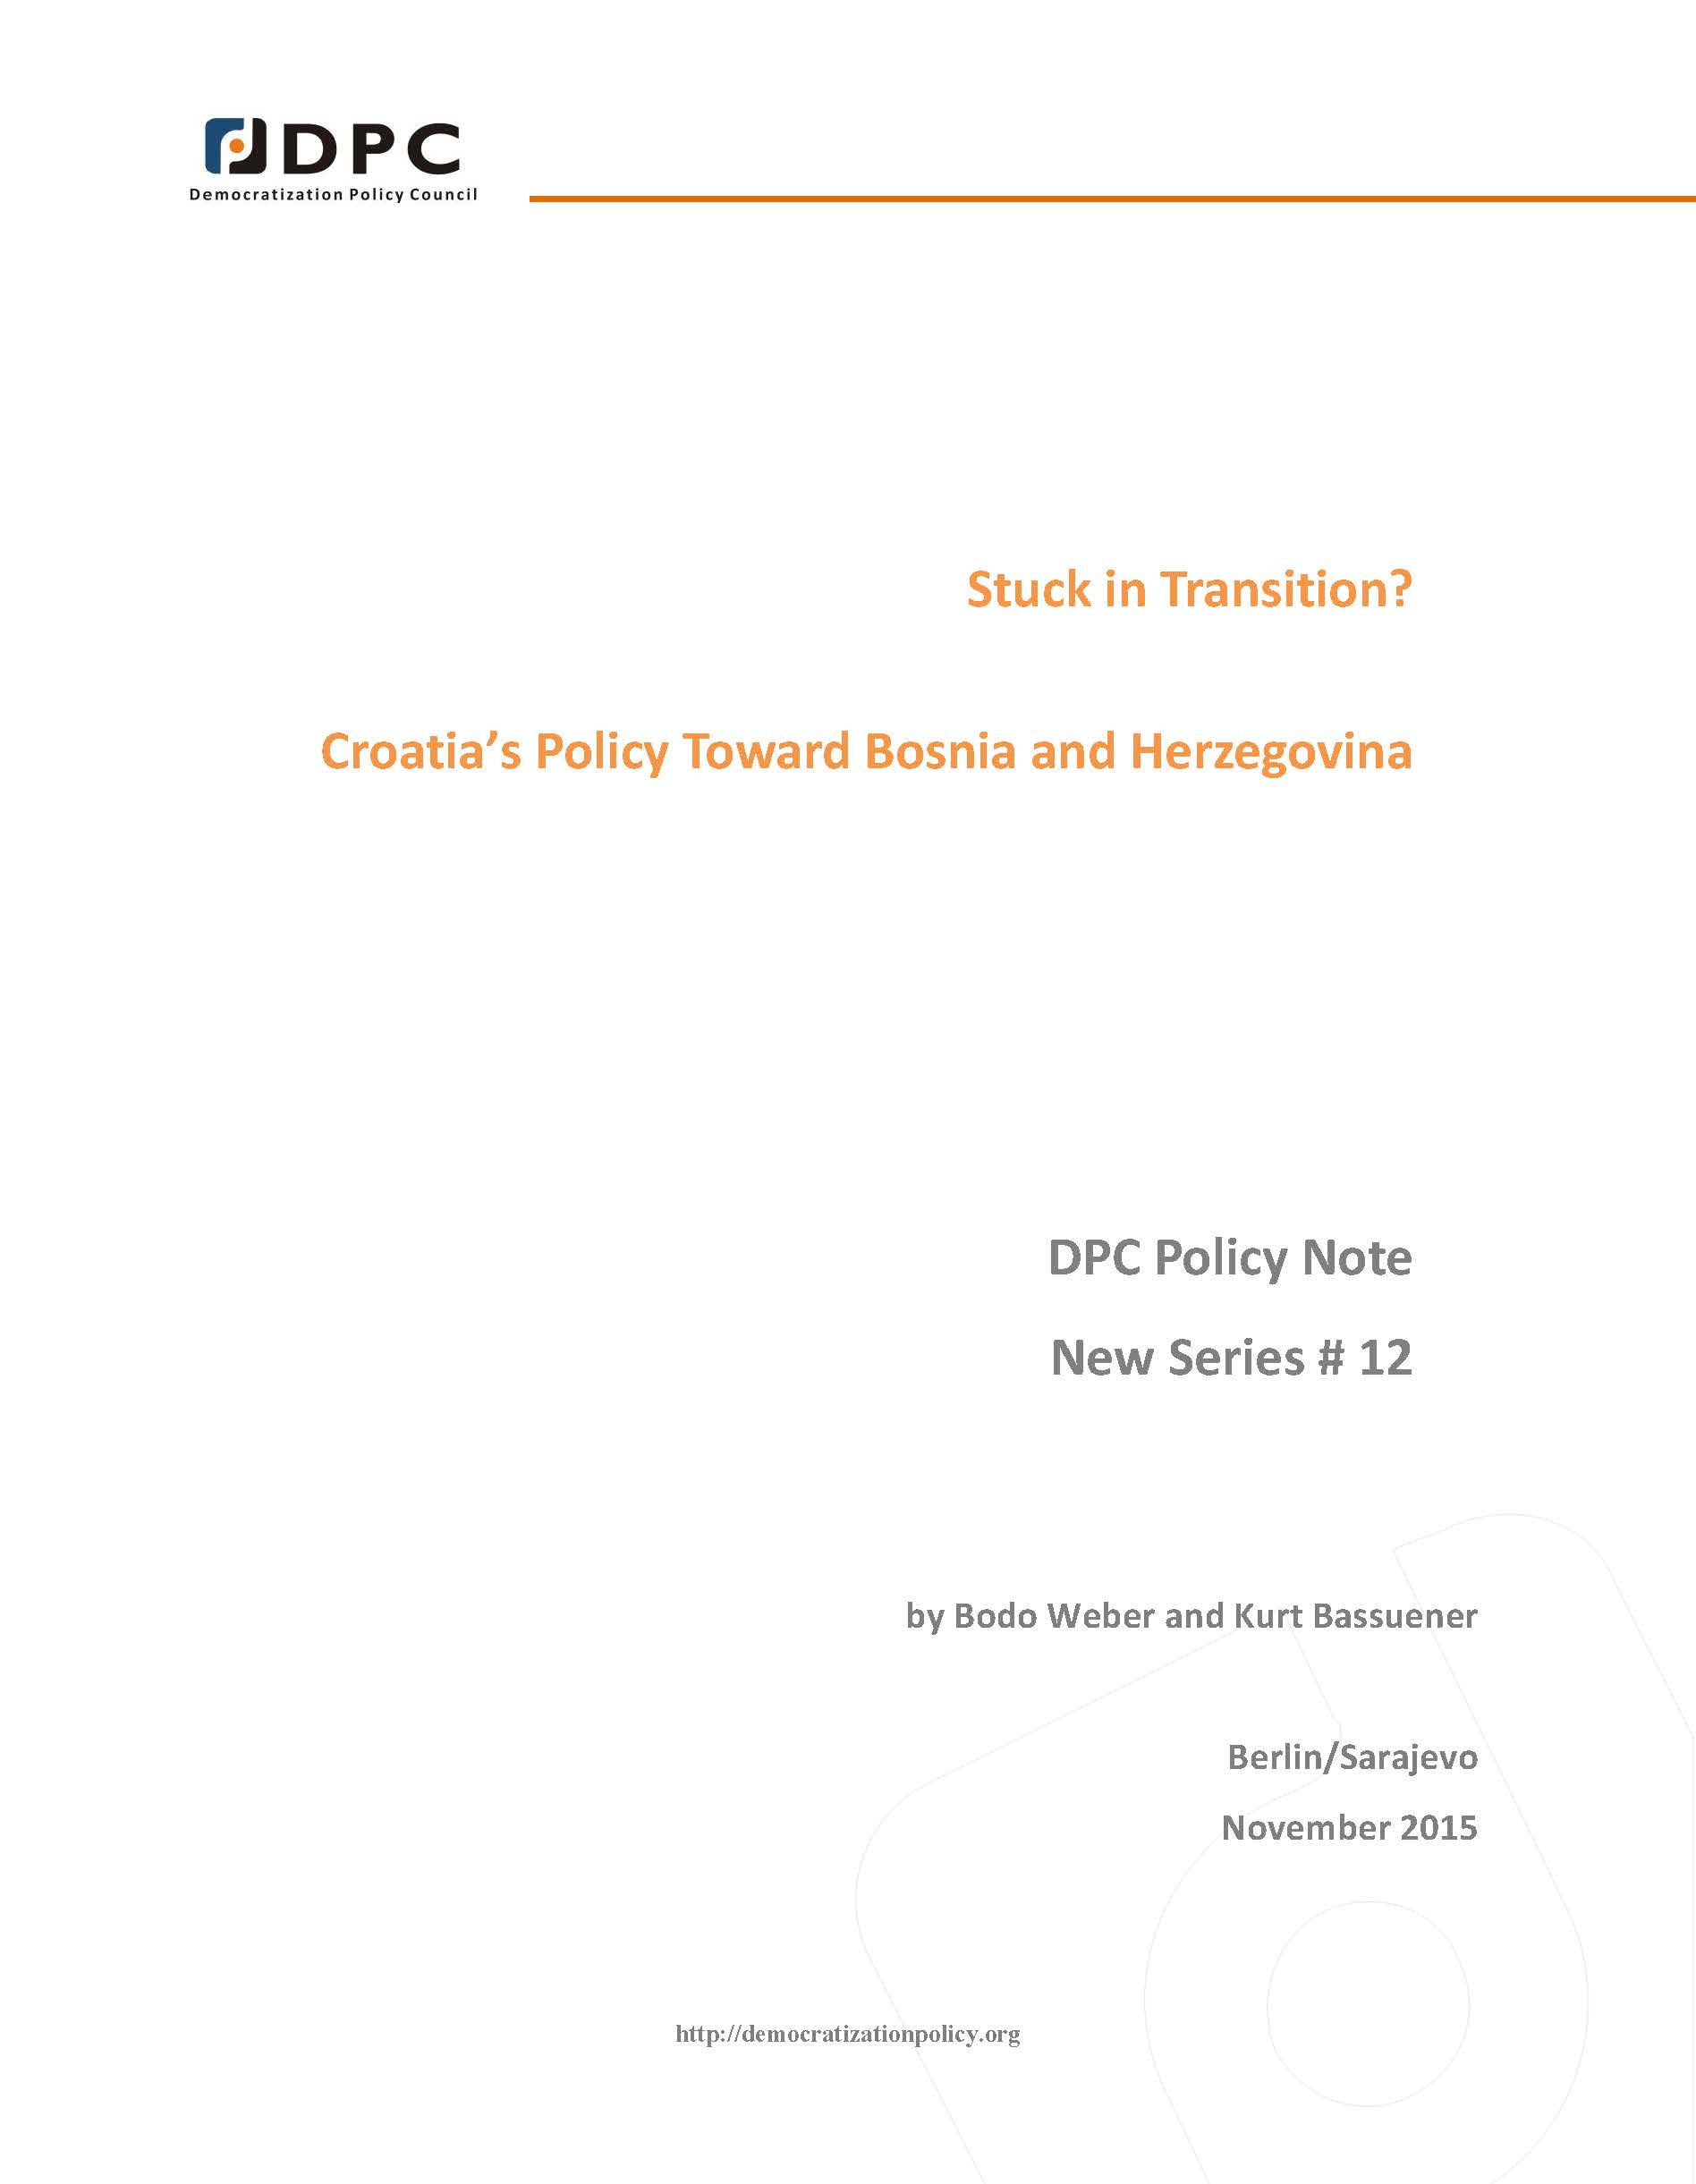 DPC POLICY NOTE 12: Stuck in Transition? Croatia’s Policy Toward Bosnia and Herzegovina.